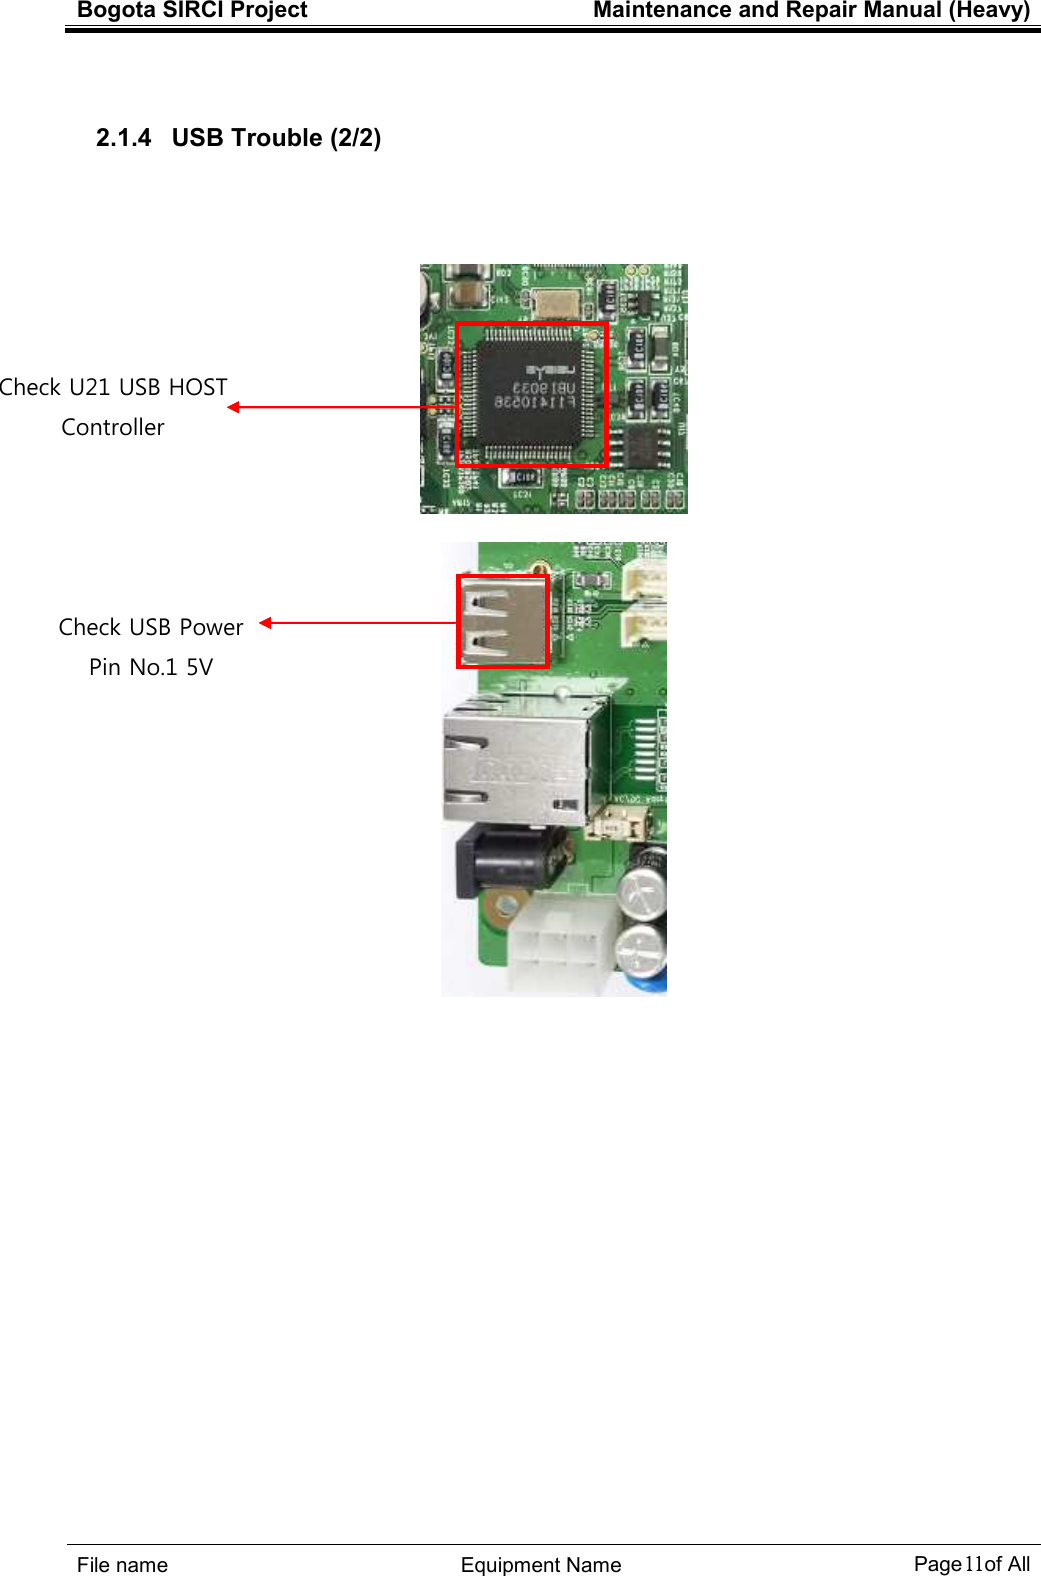 Bogota SIRCI Project  Maintenance and Repair Manual (Heavy)     １１１１１１１１ ! 2.1.4   USB Trouble (2/2) Check U21 USB HOST Controller   Check USB Power Pin No.1 5V 